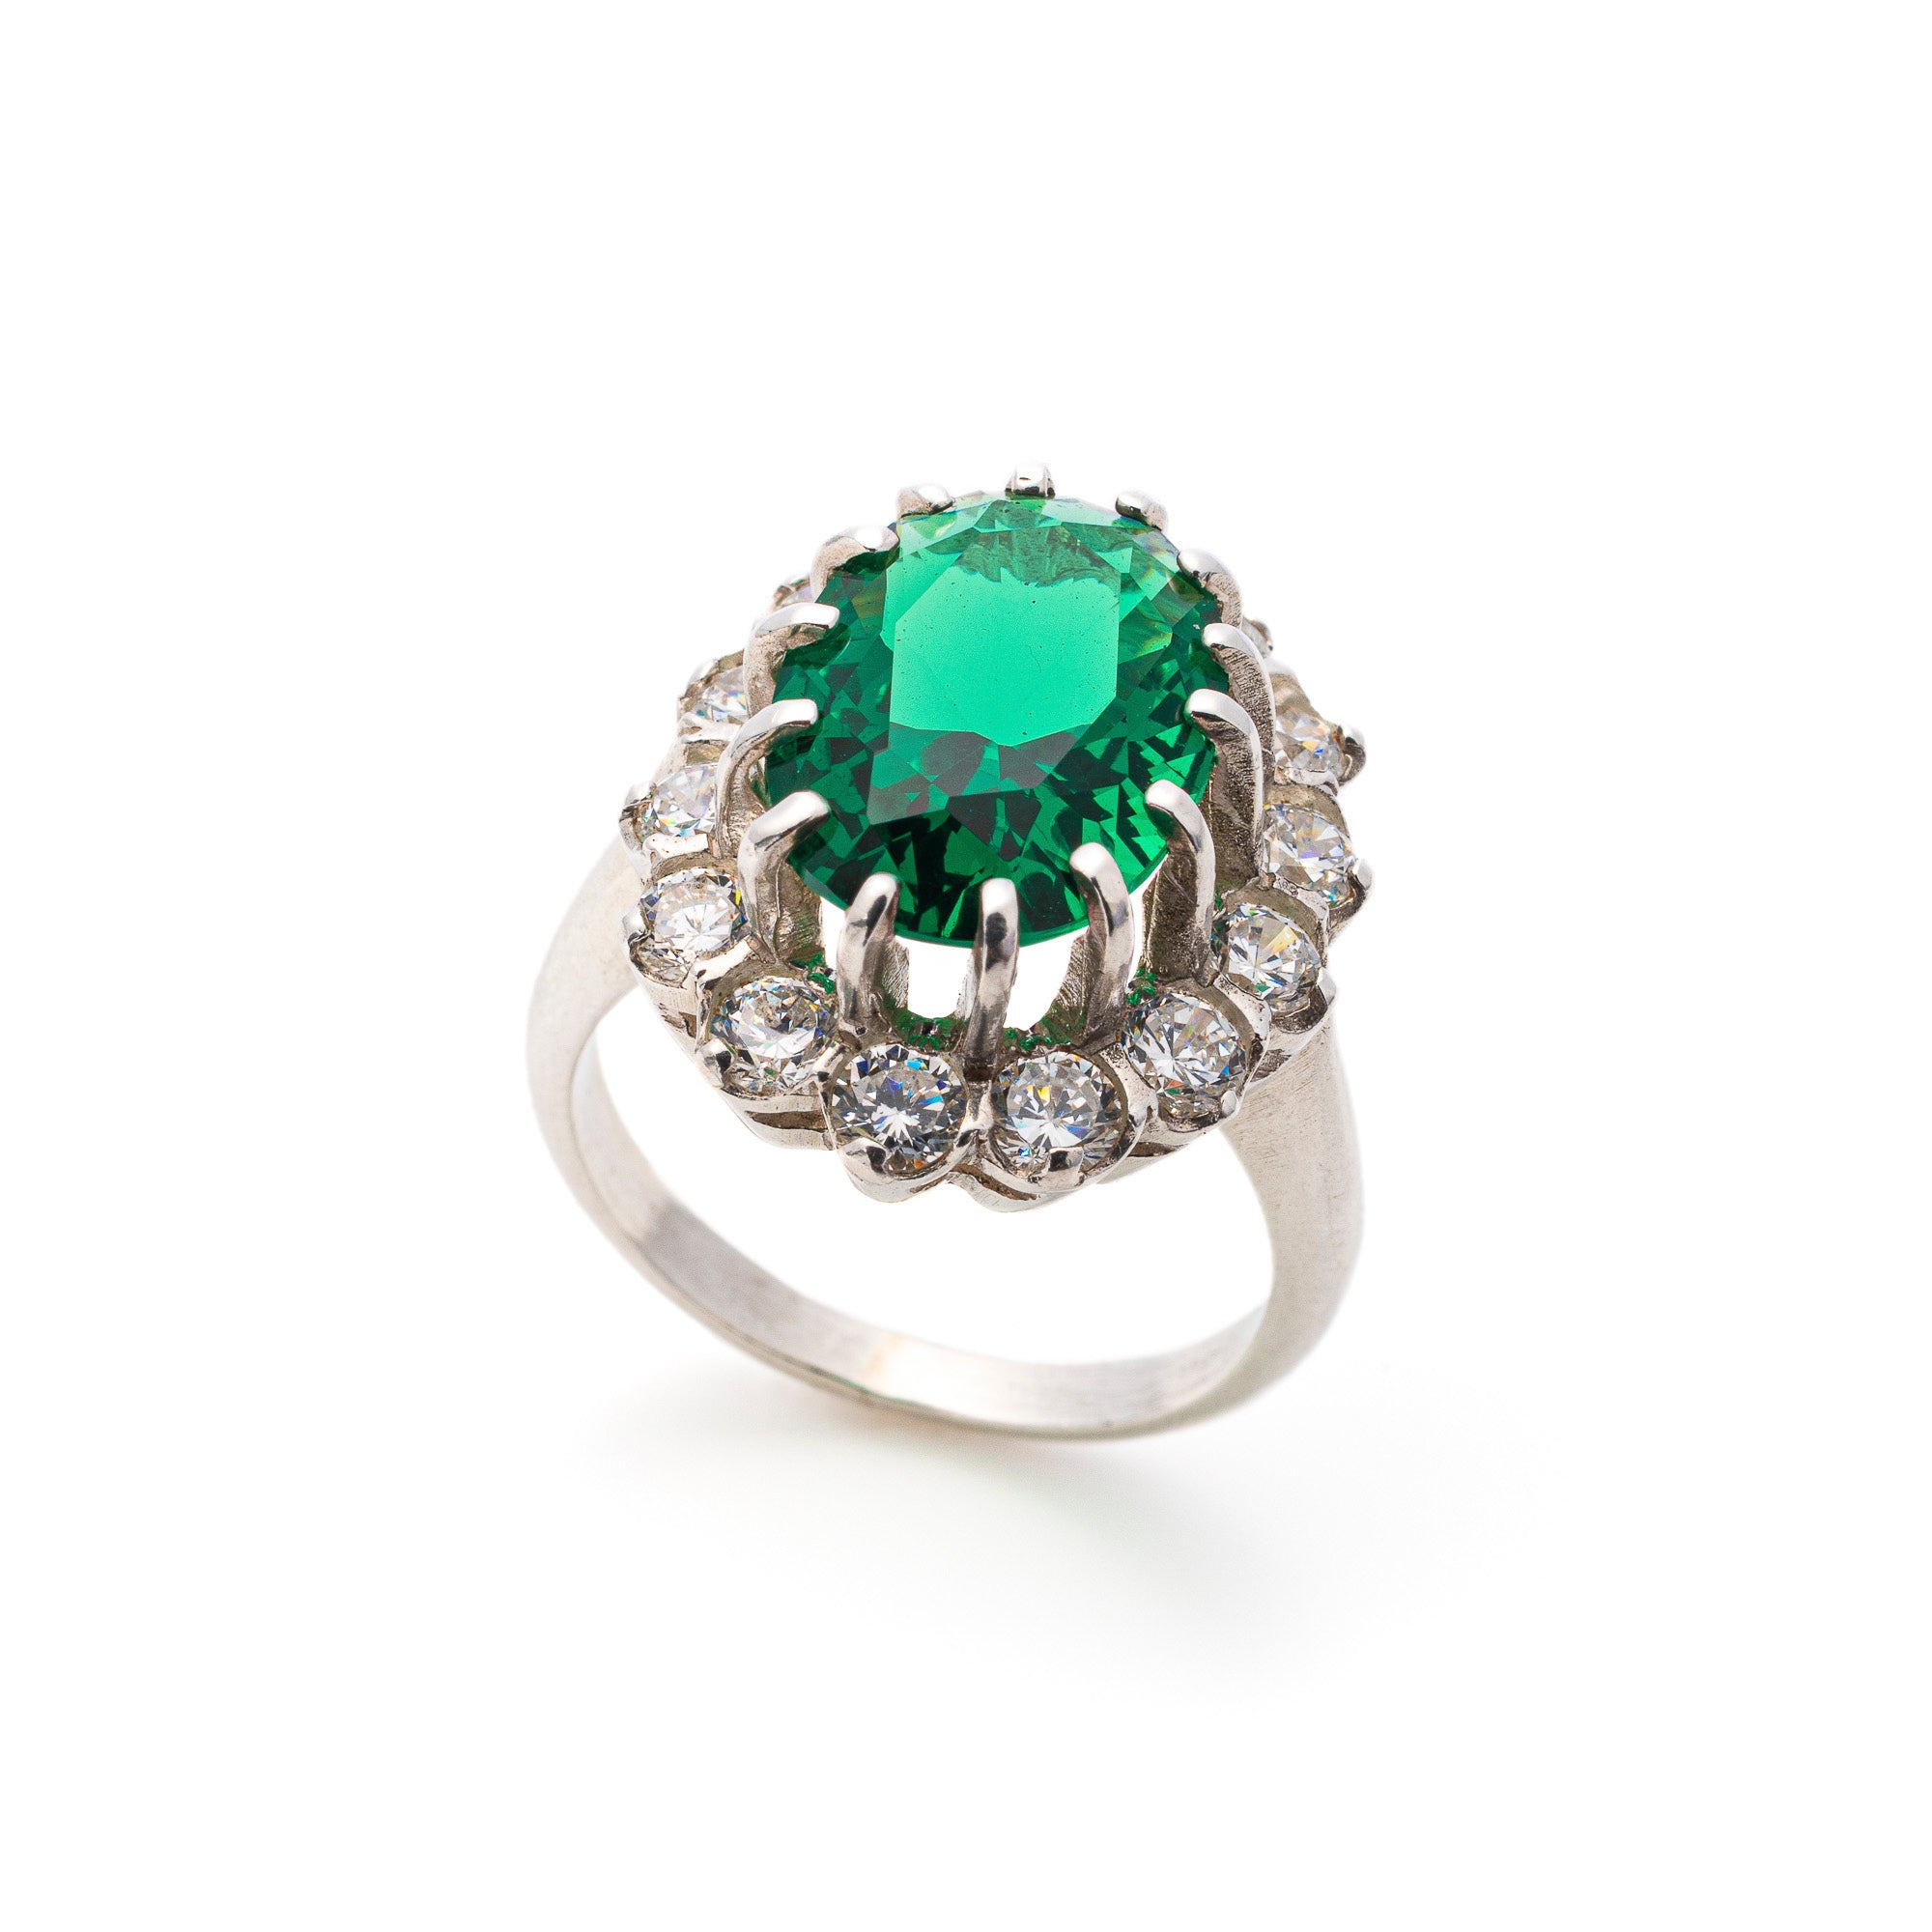 Princess Diana Ring - Cocktail Emerald Ring - Green Victorian Ring